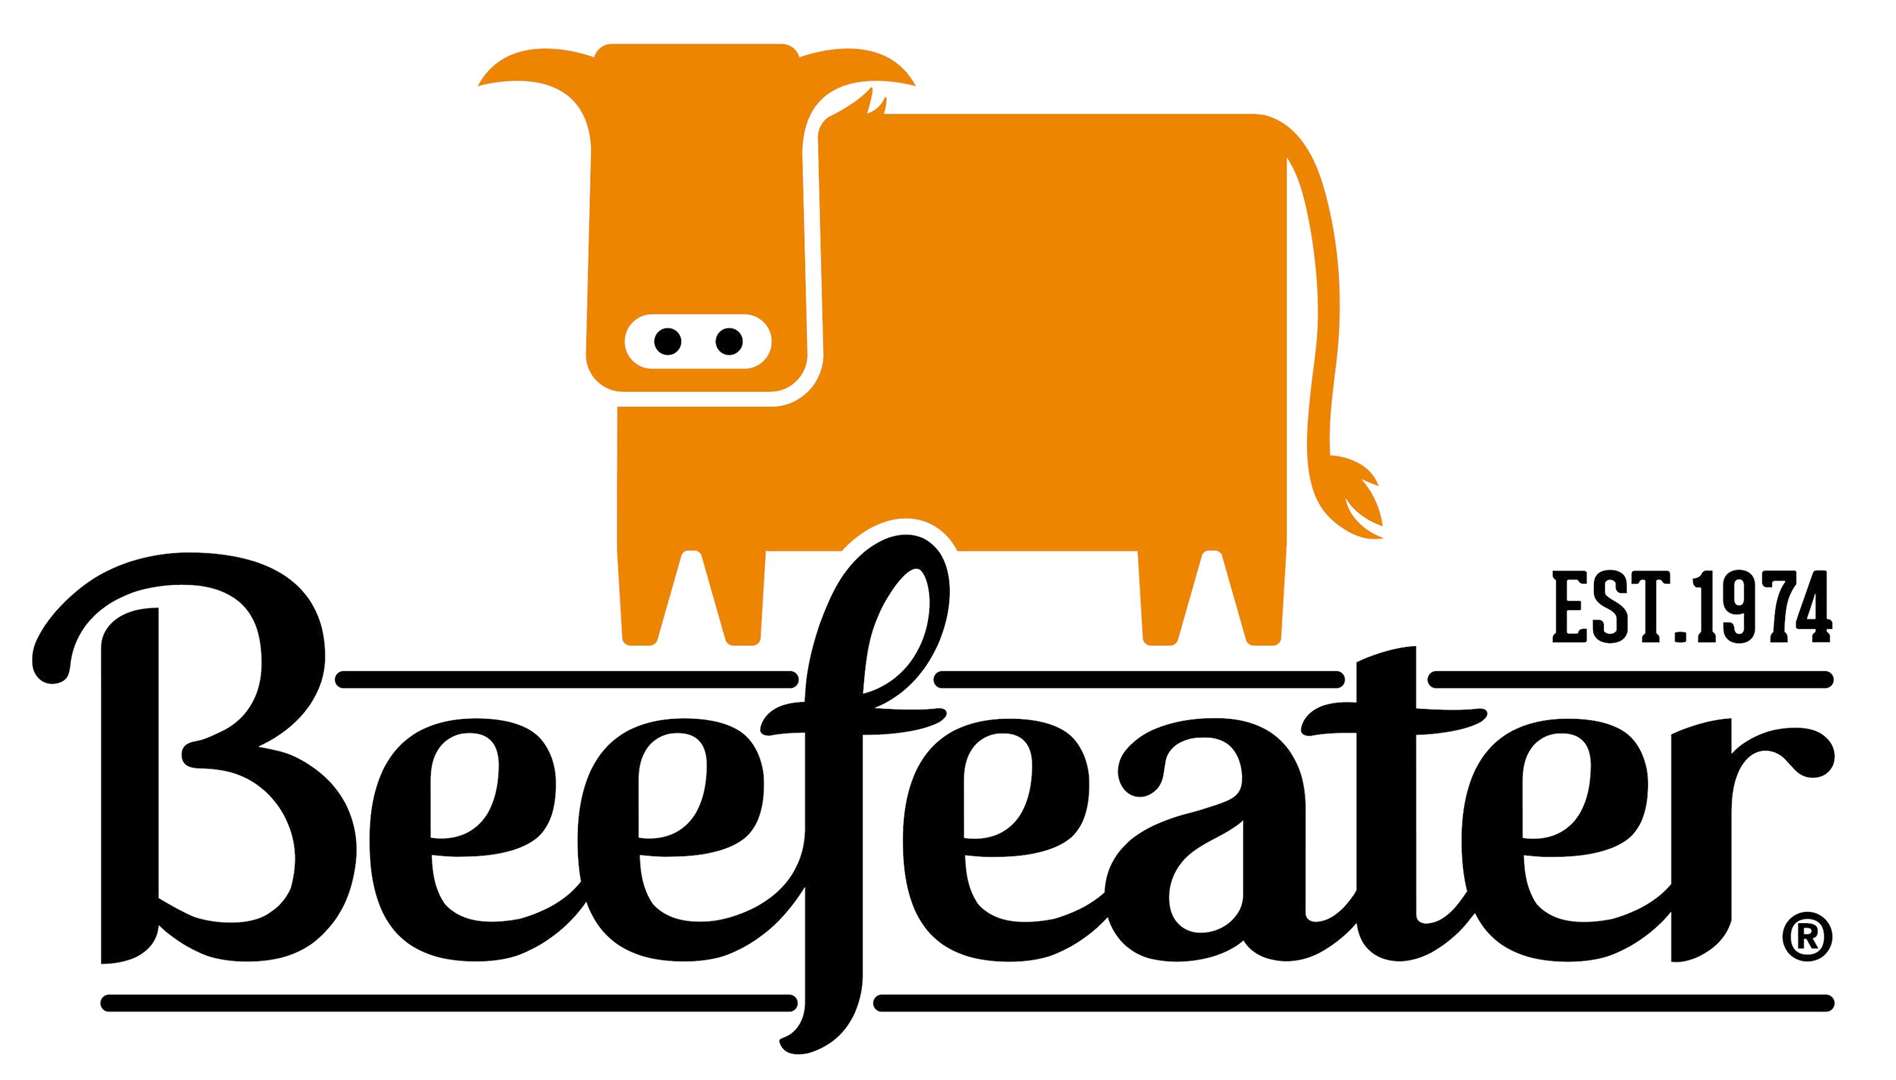 Beefeater restaurants offer a kids eat free deal for breakfast